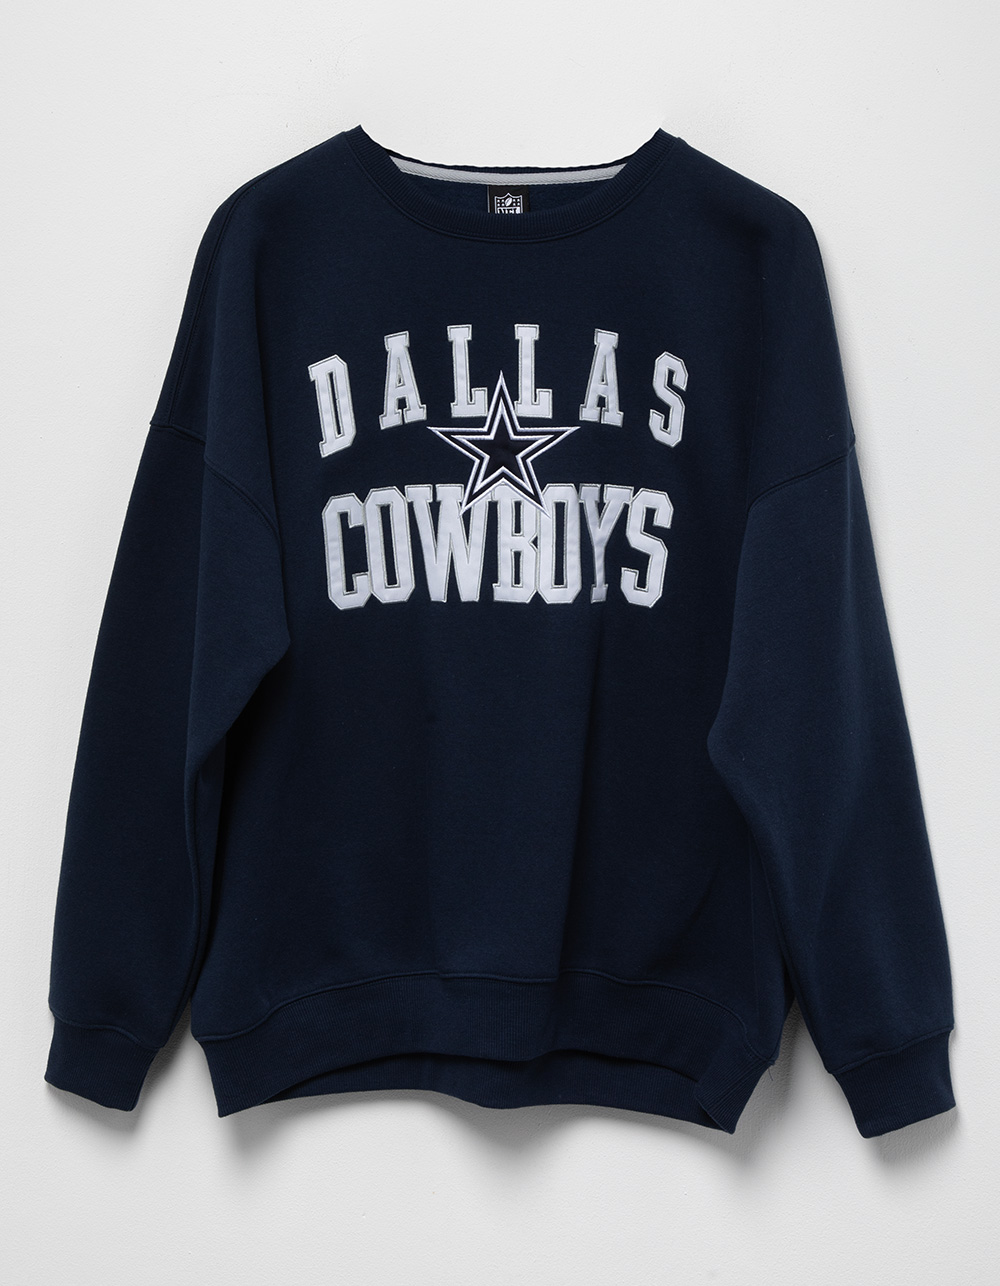 NFL '92 Dallas Cowboys Sweater Navy (XL) – Chop Suey Official